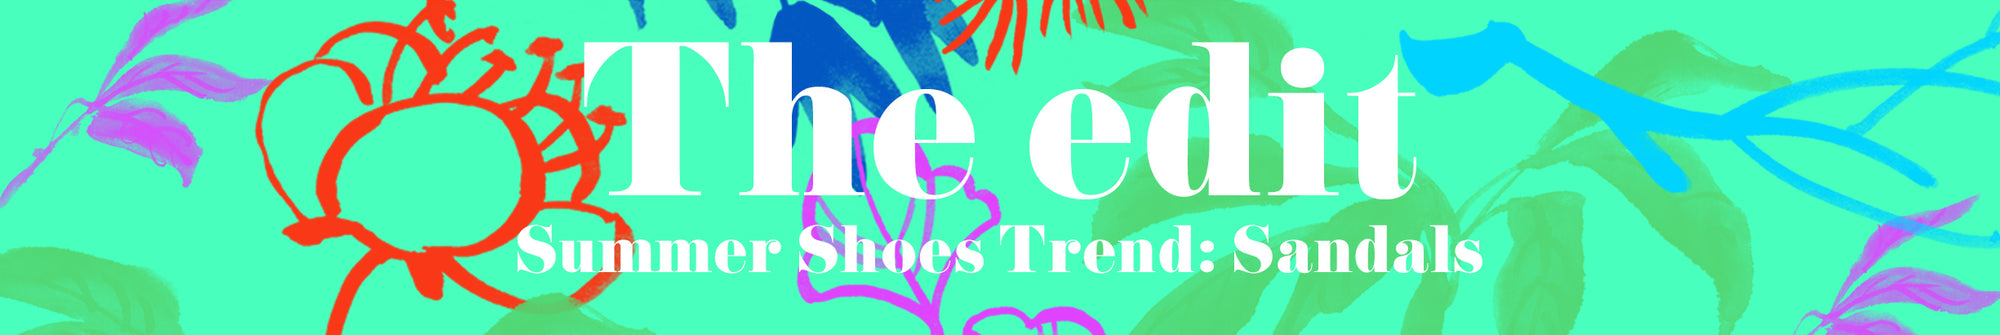  Men SS20 - Summer Shoes Trend: Sandals